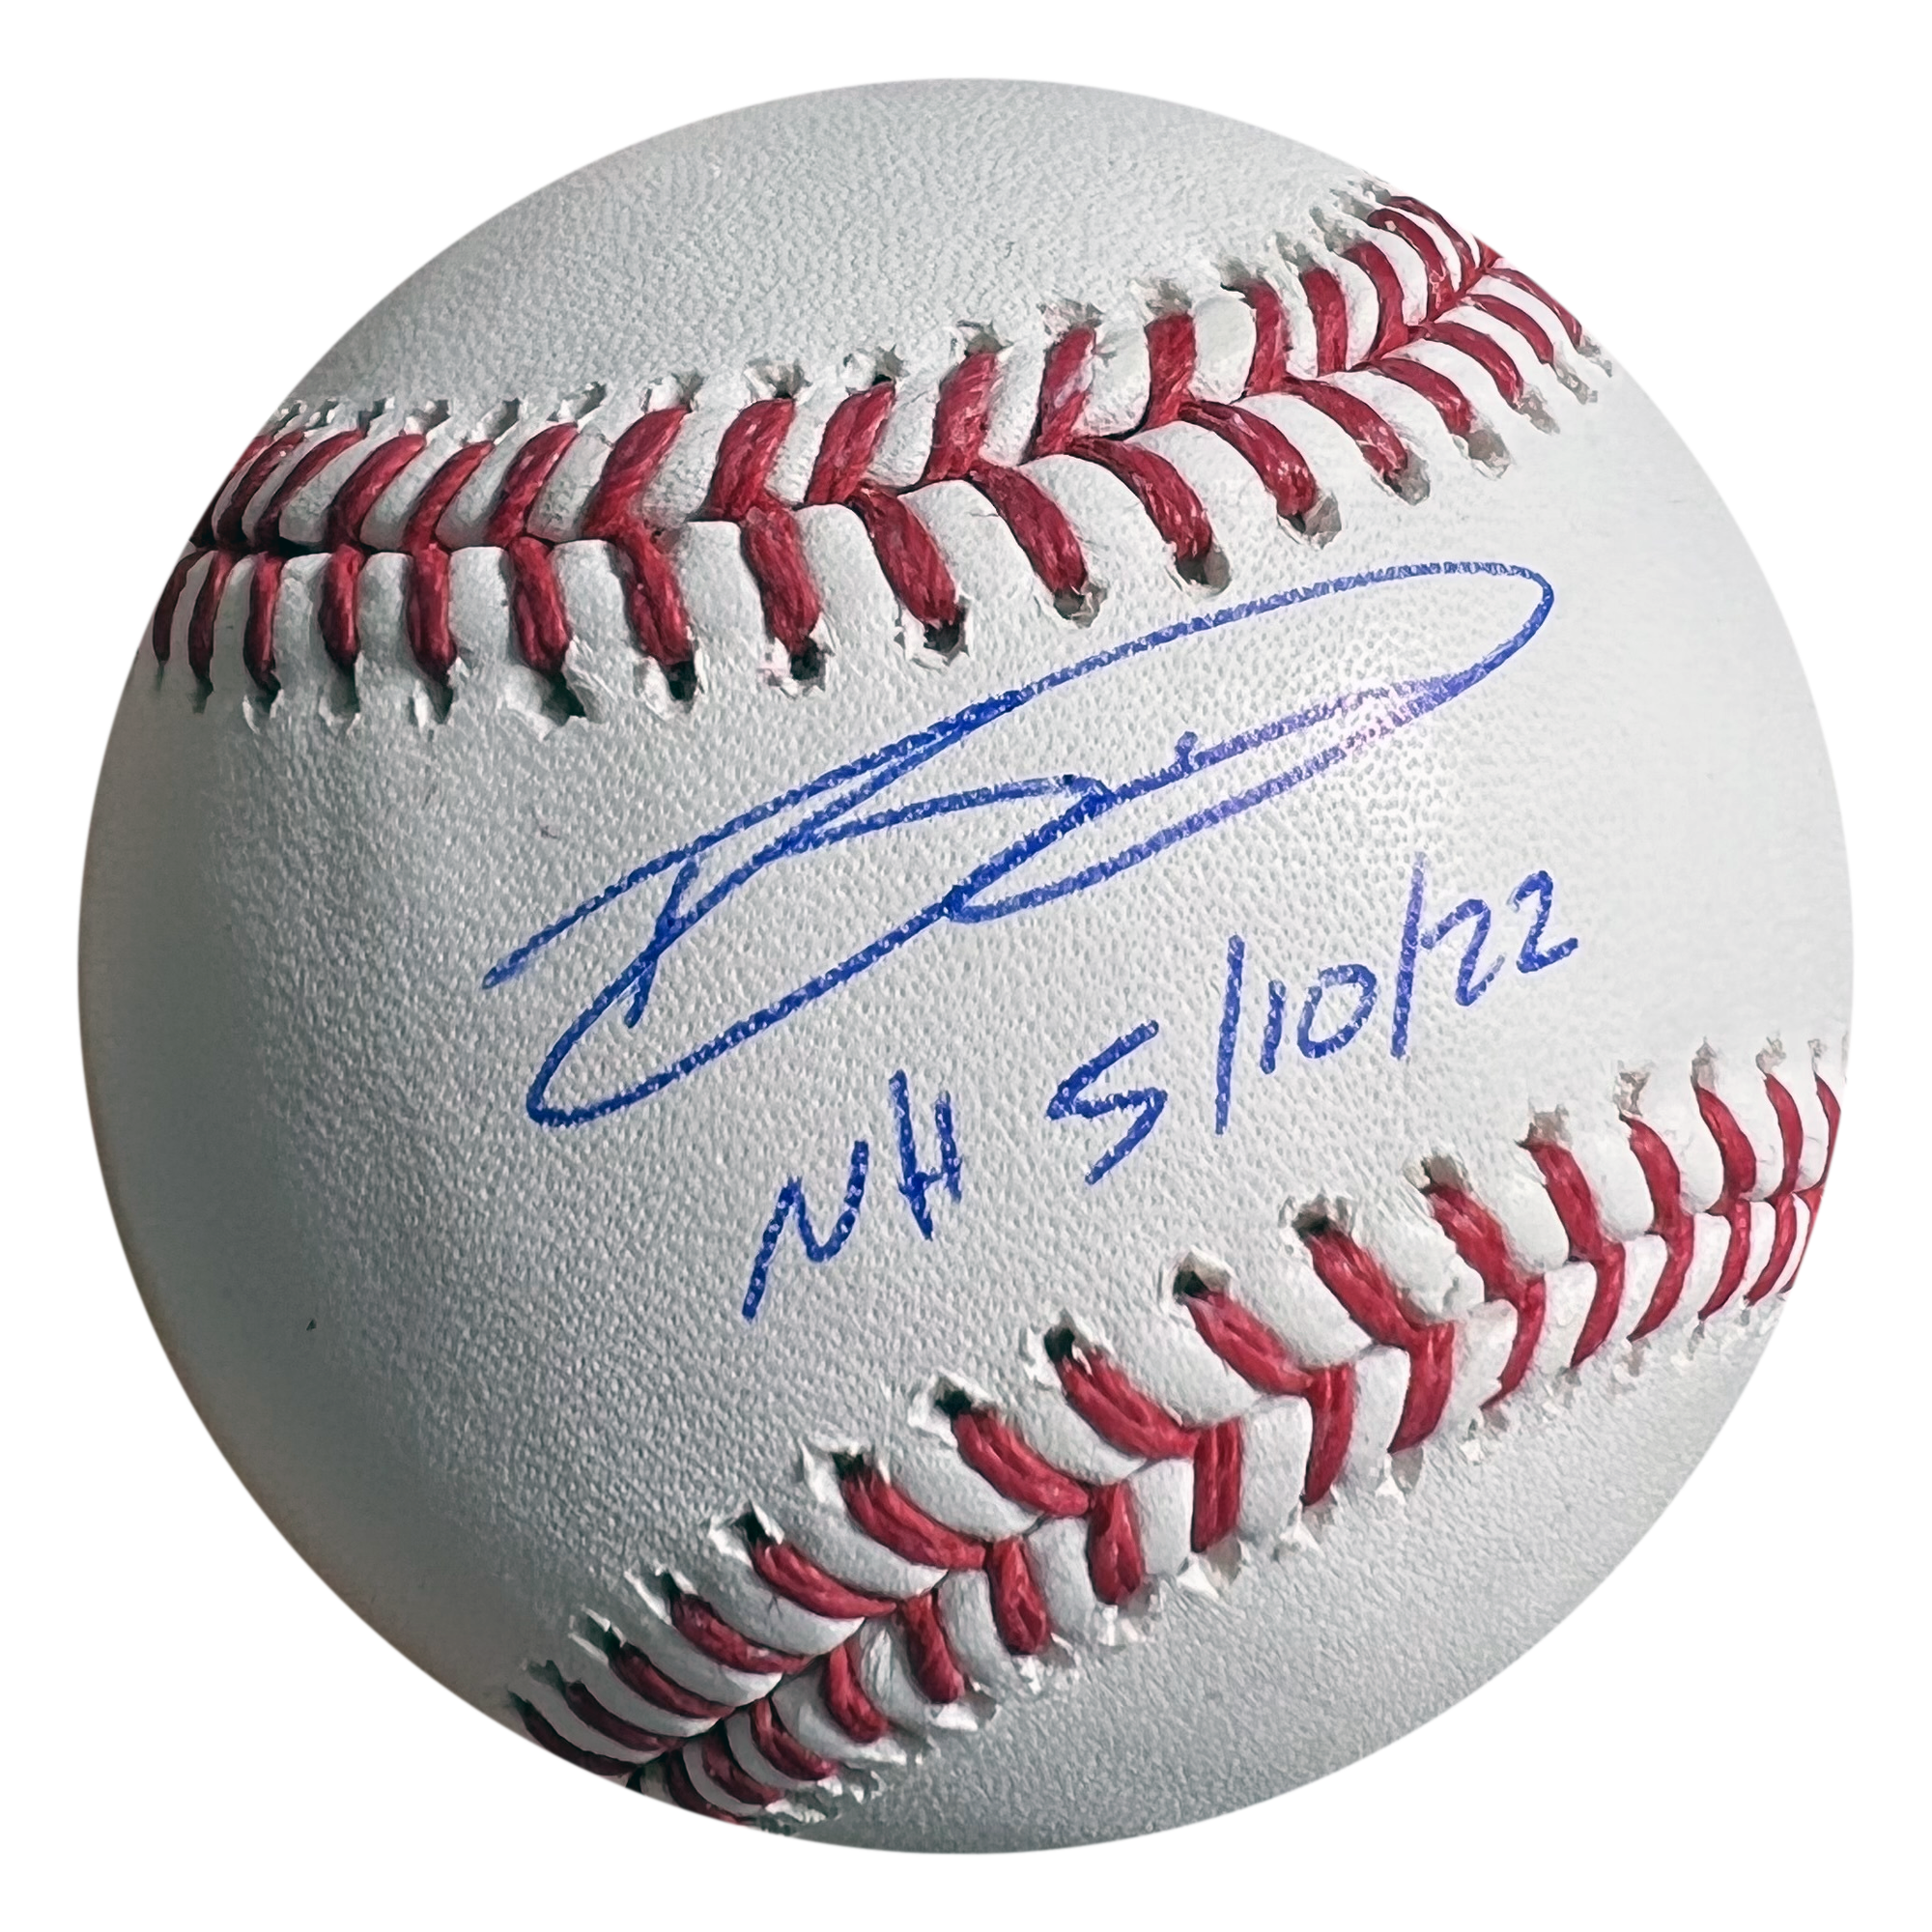 Reid Detmers Autographed Major League Baseball Inscribed "NH 5/10/22"